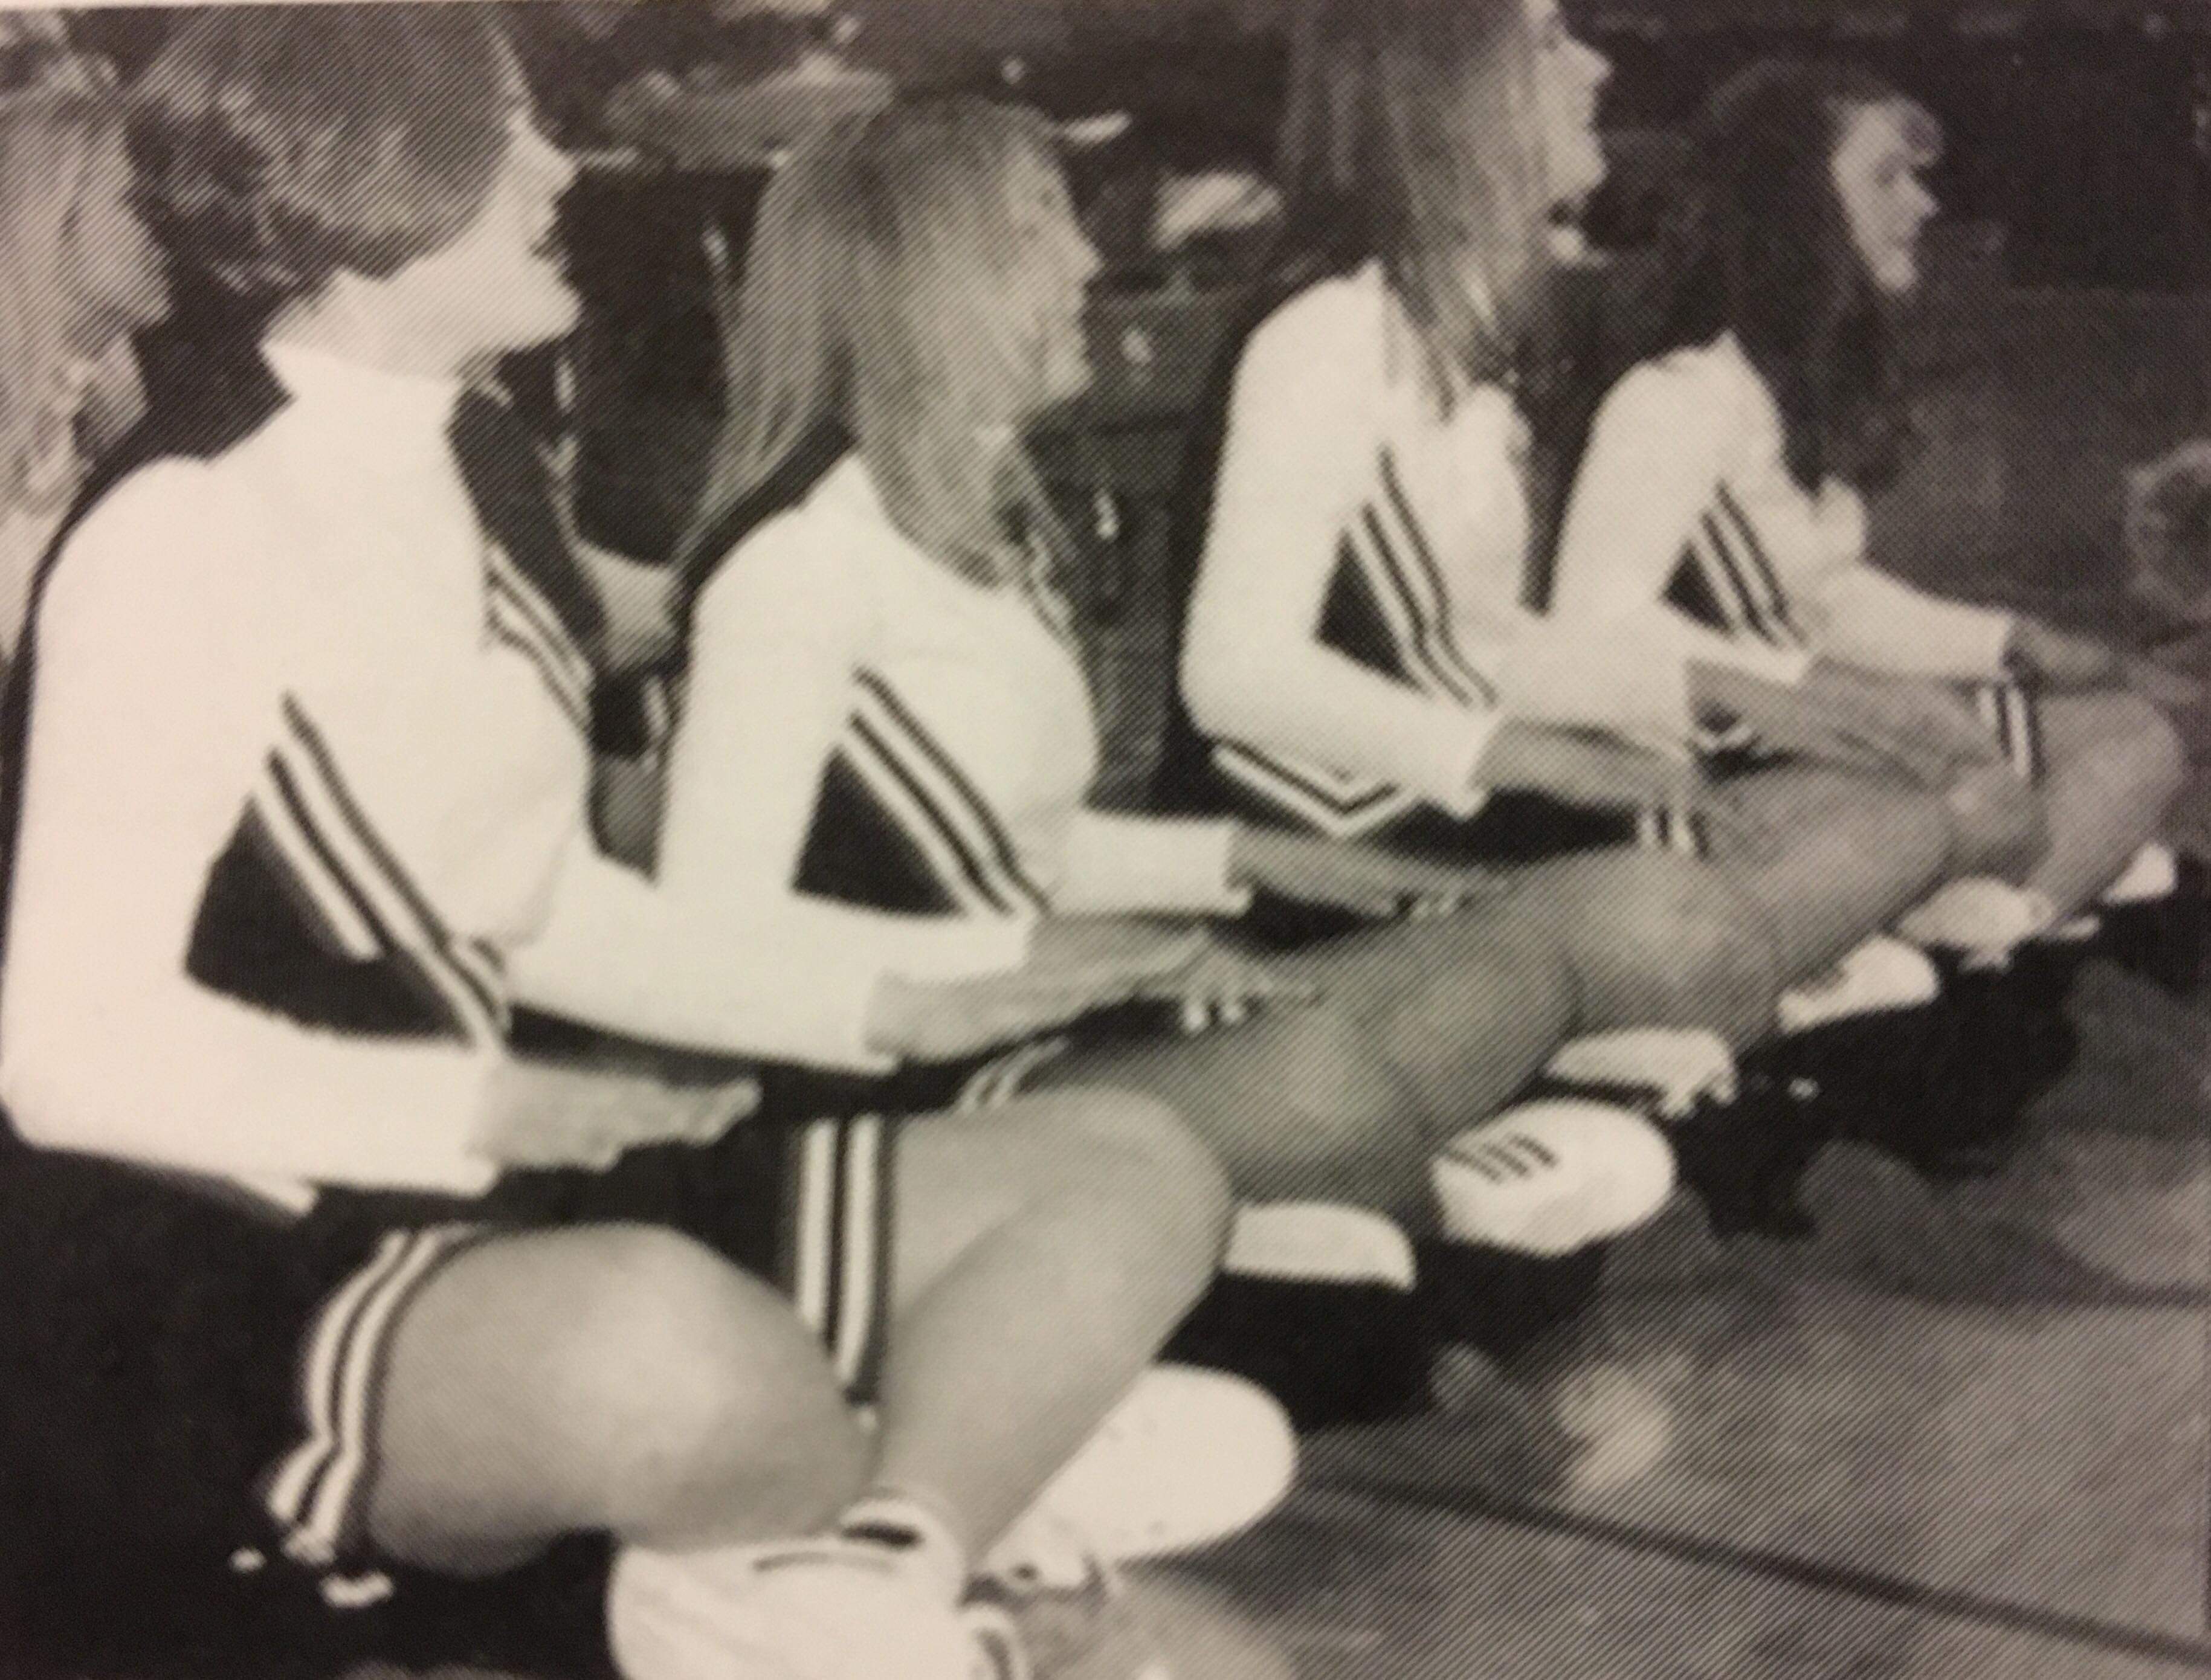 Norse Cheerleaders in Action (L to R): Elizabeth Hauser, Shannon Paulson, Alyssa Glanzman, and Leslie Back.